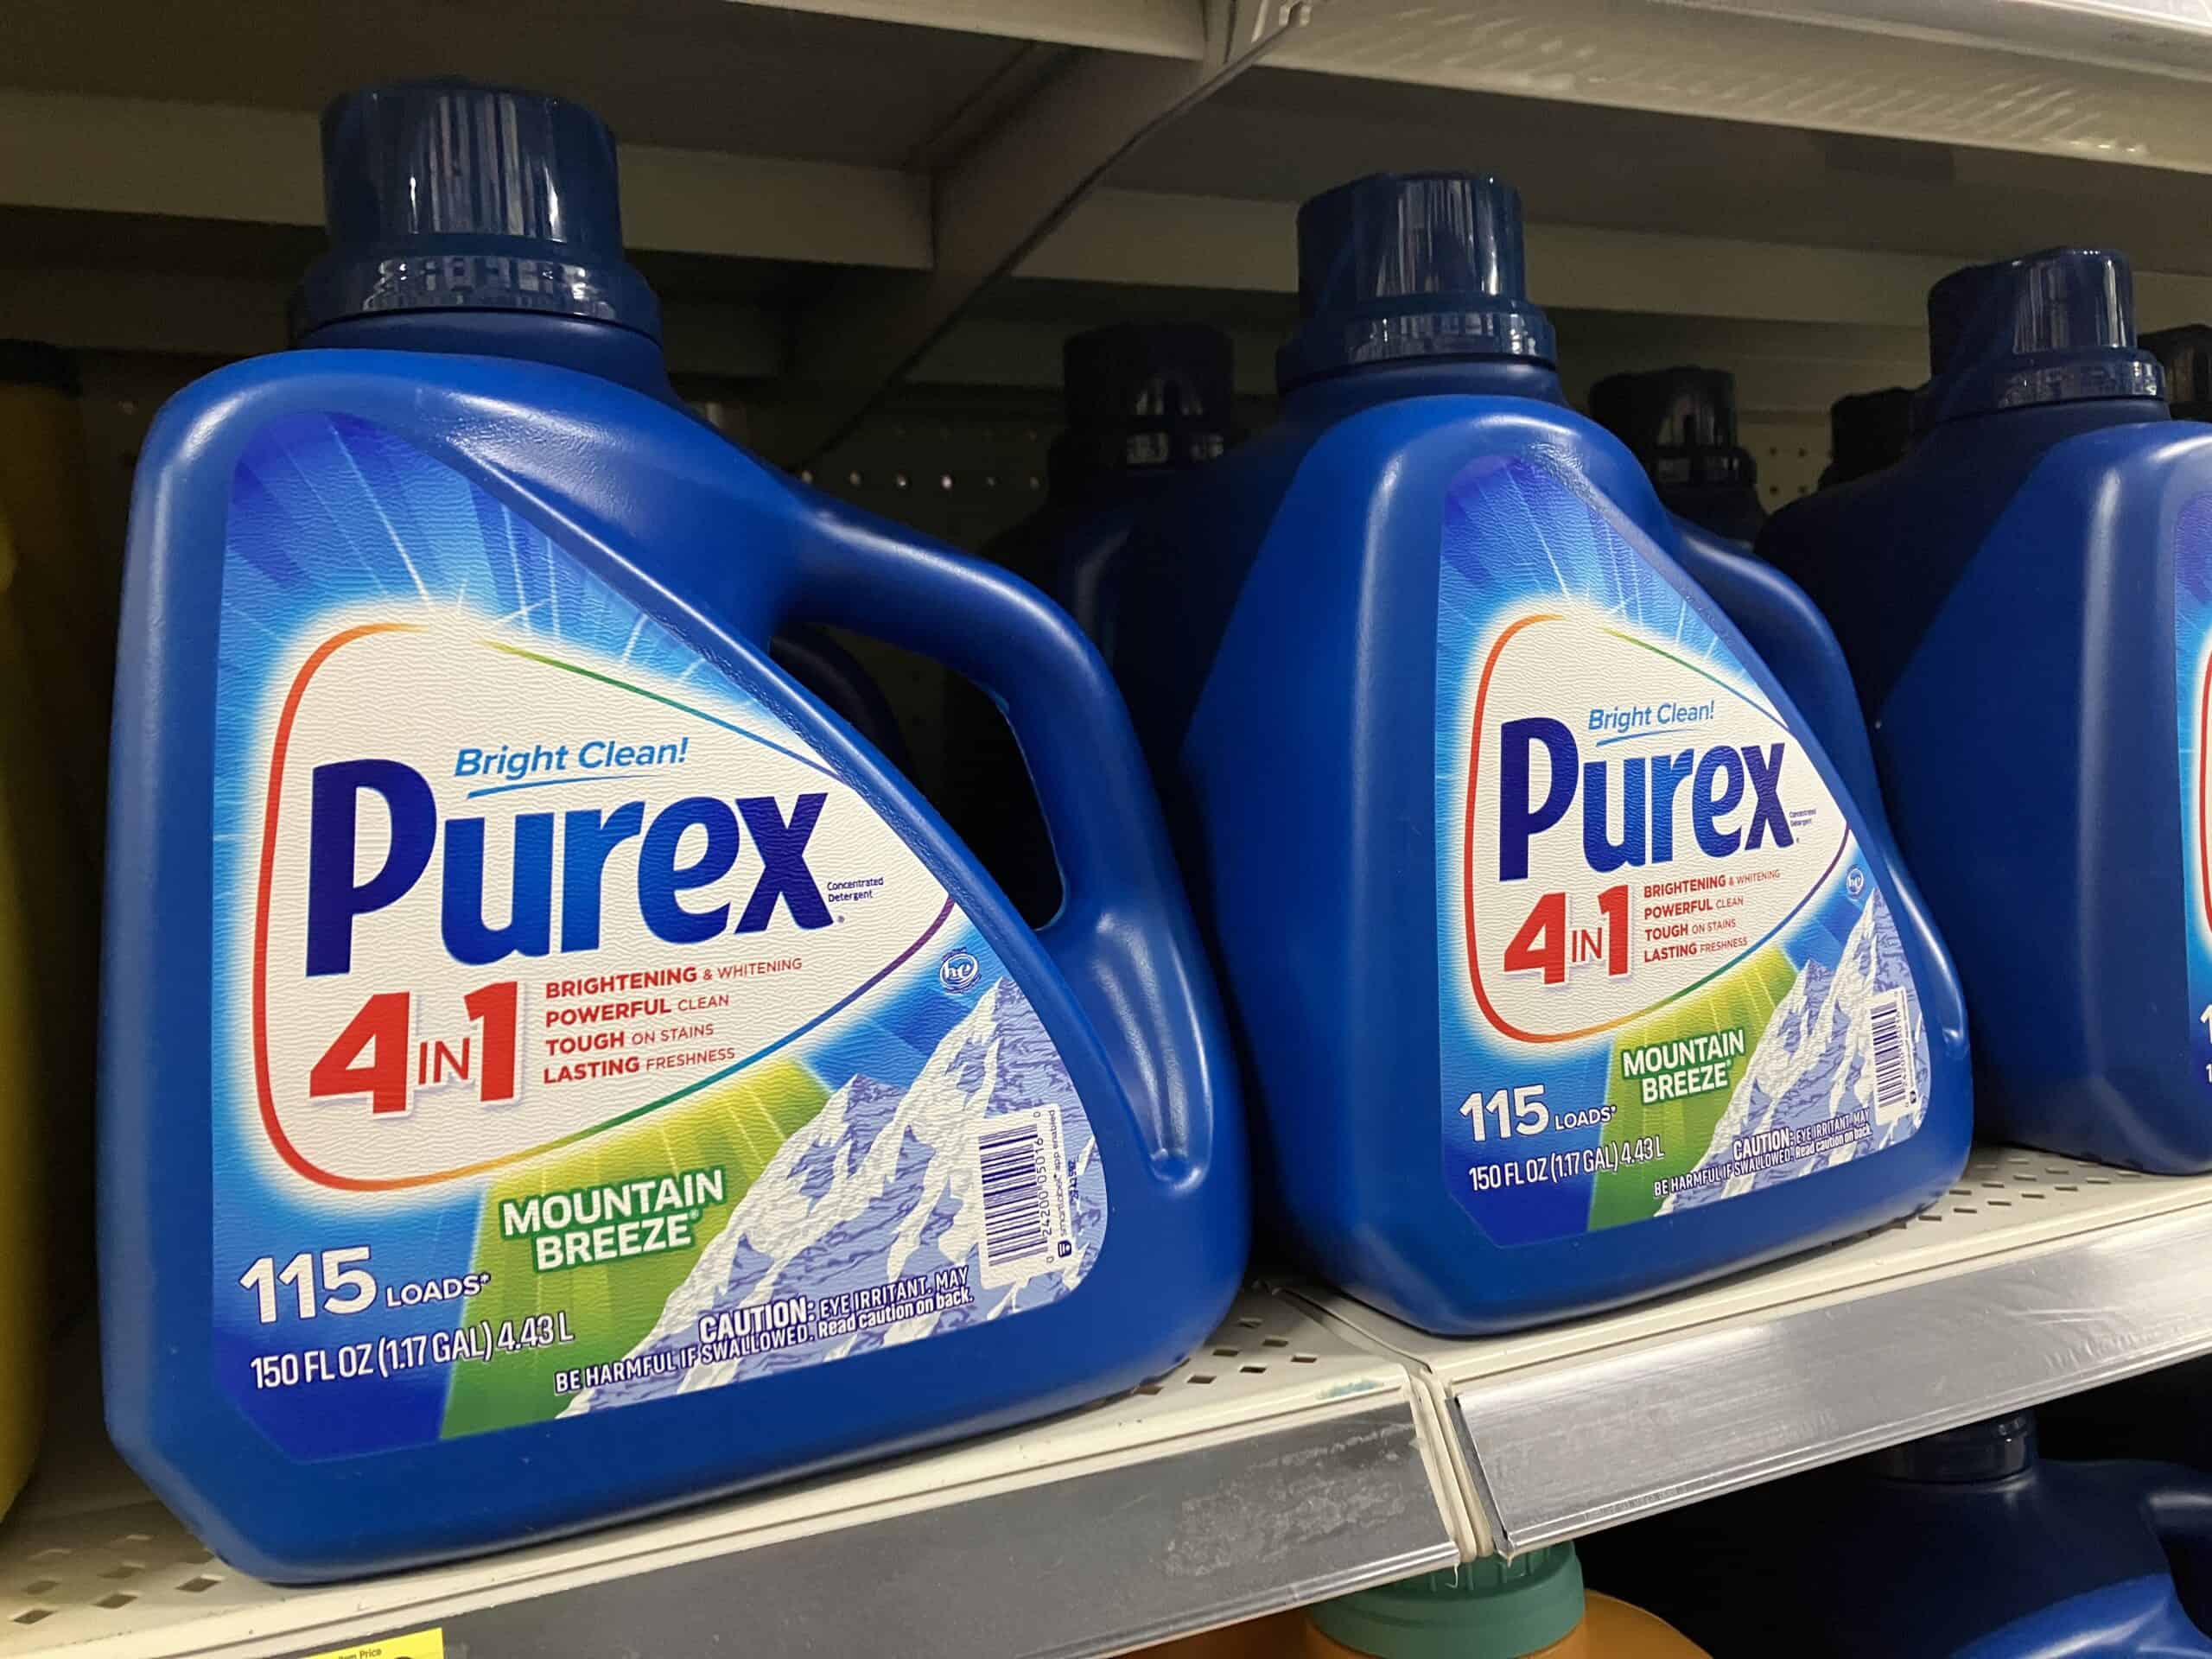 Purex "Mountain Breeze' laundry detergent